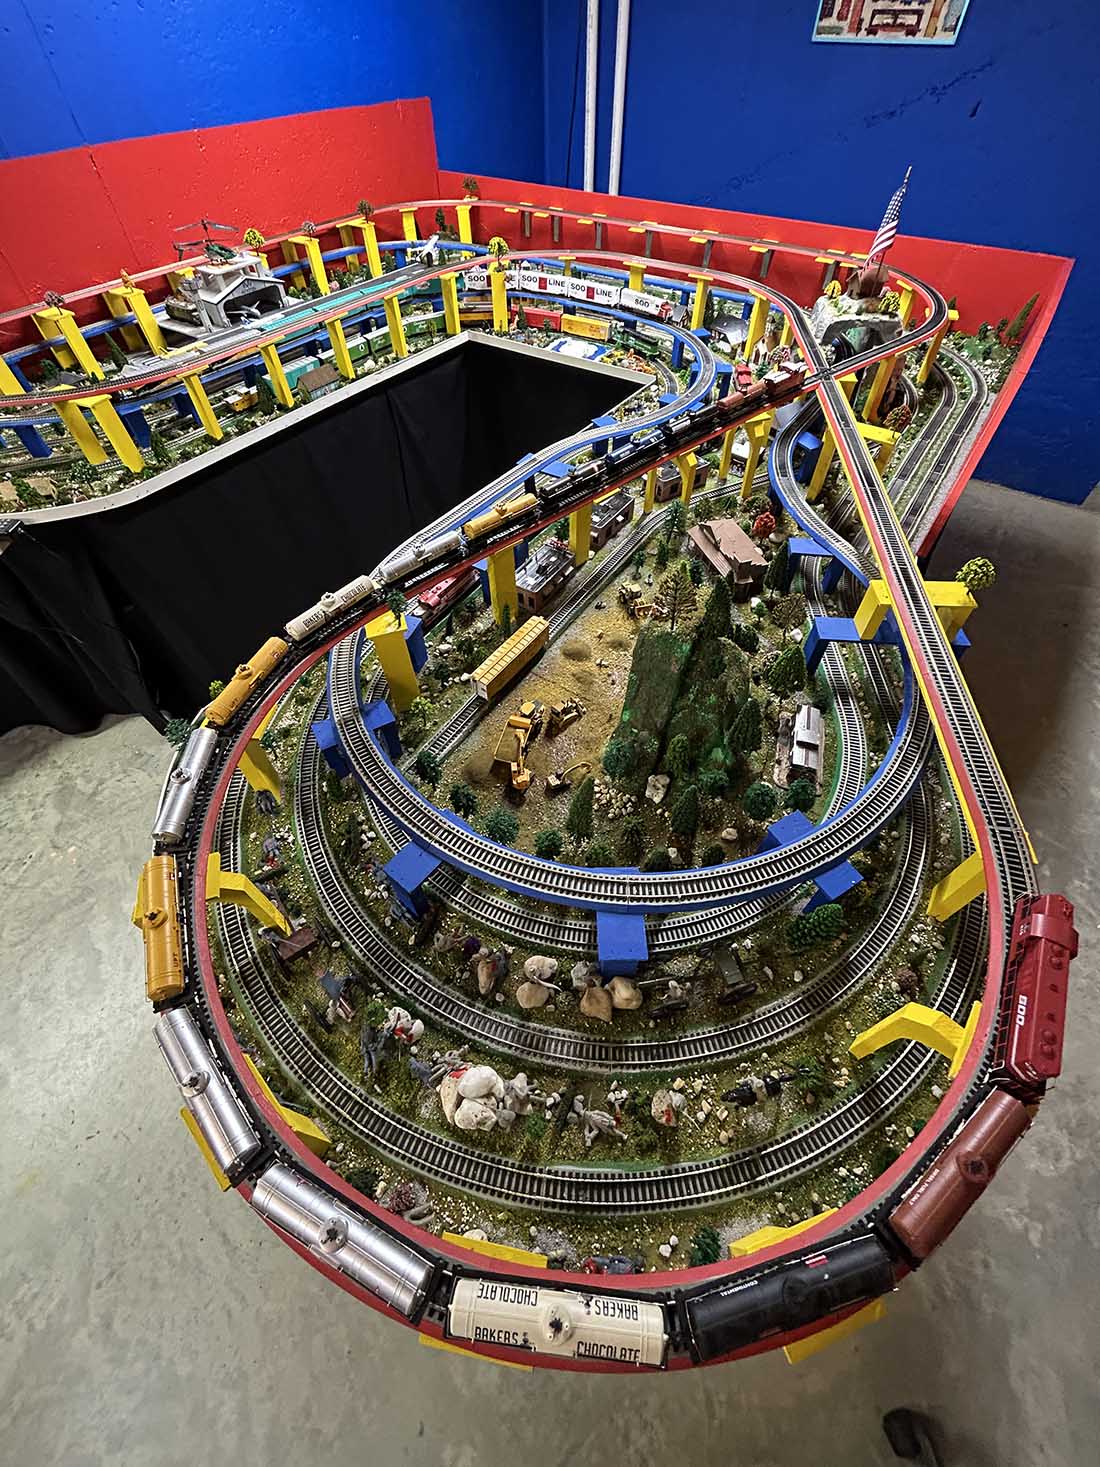 Elevated model train track